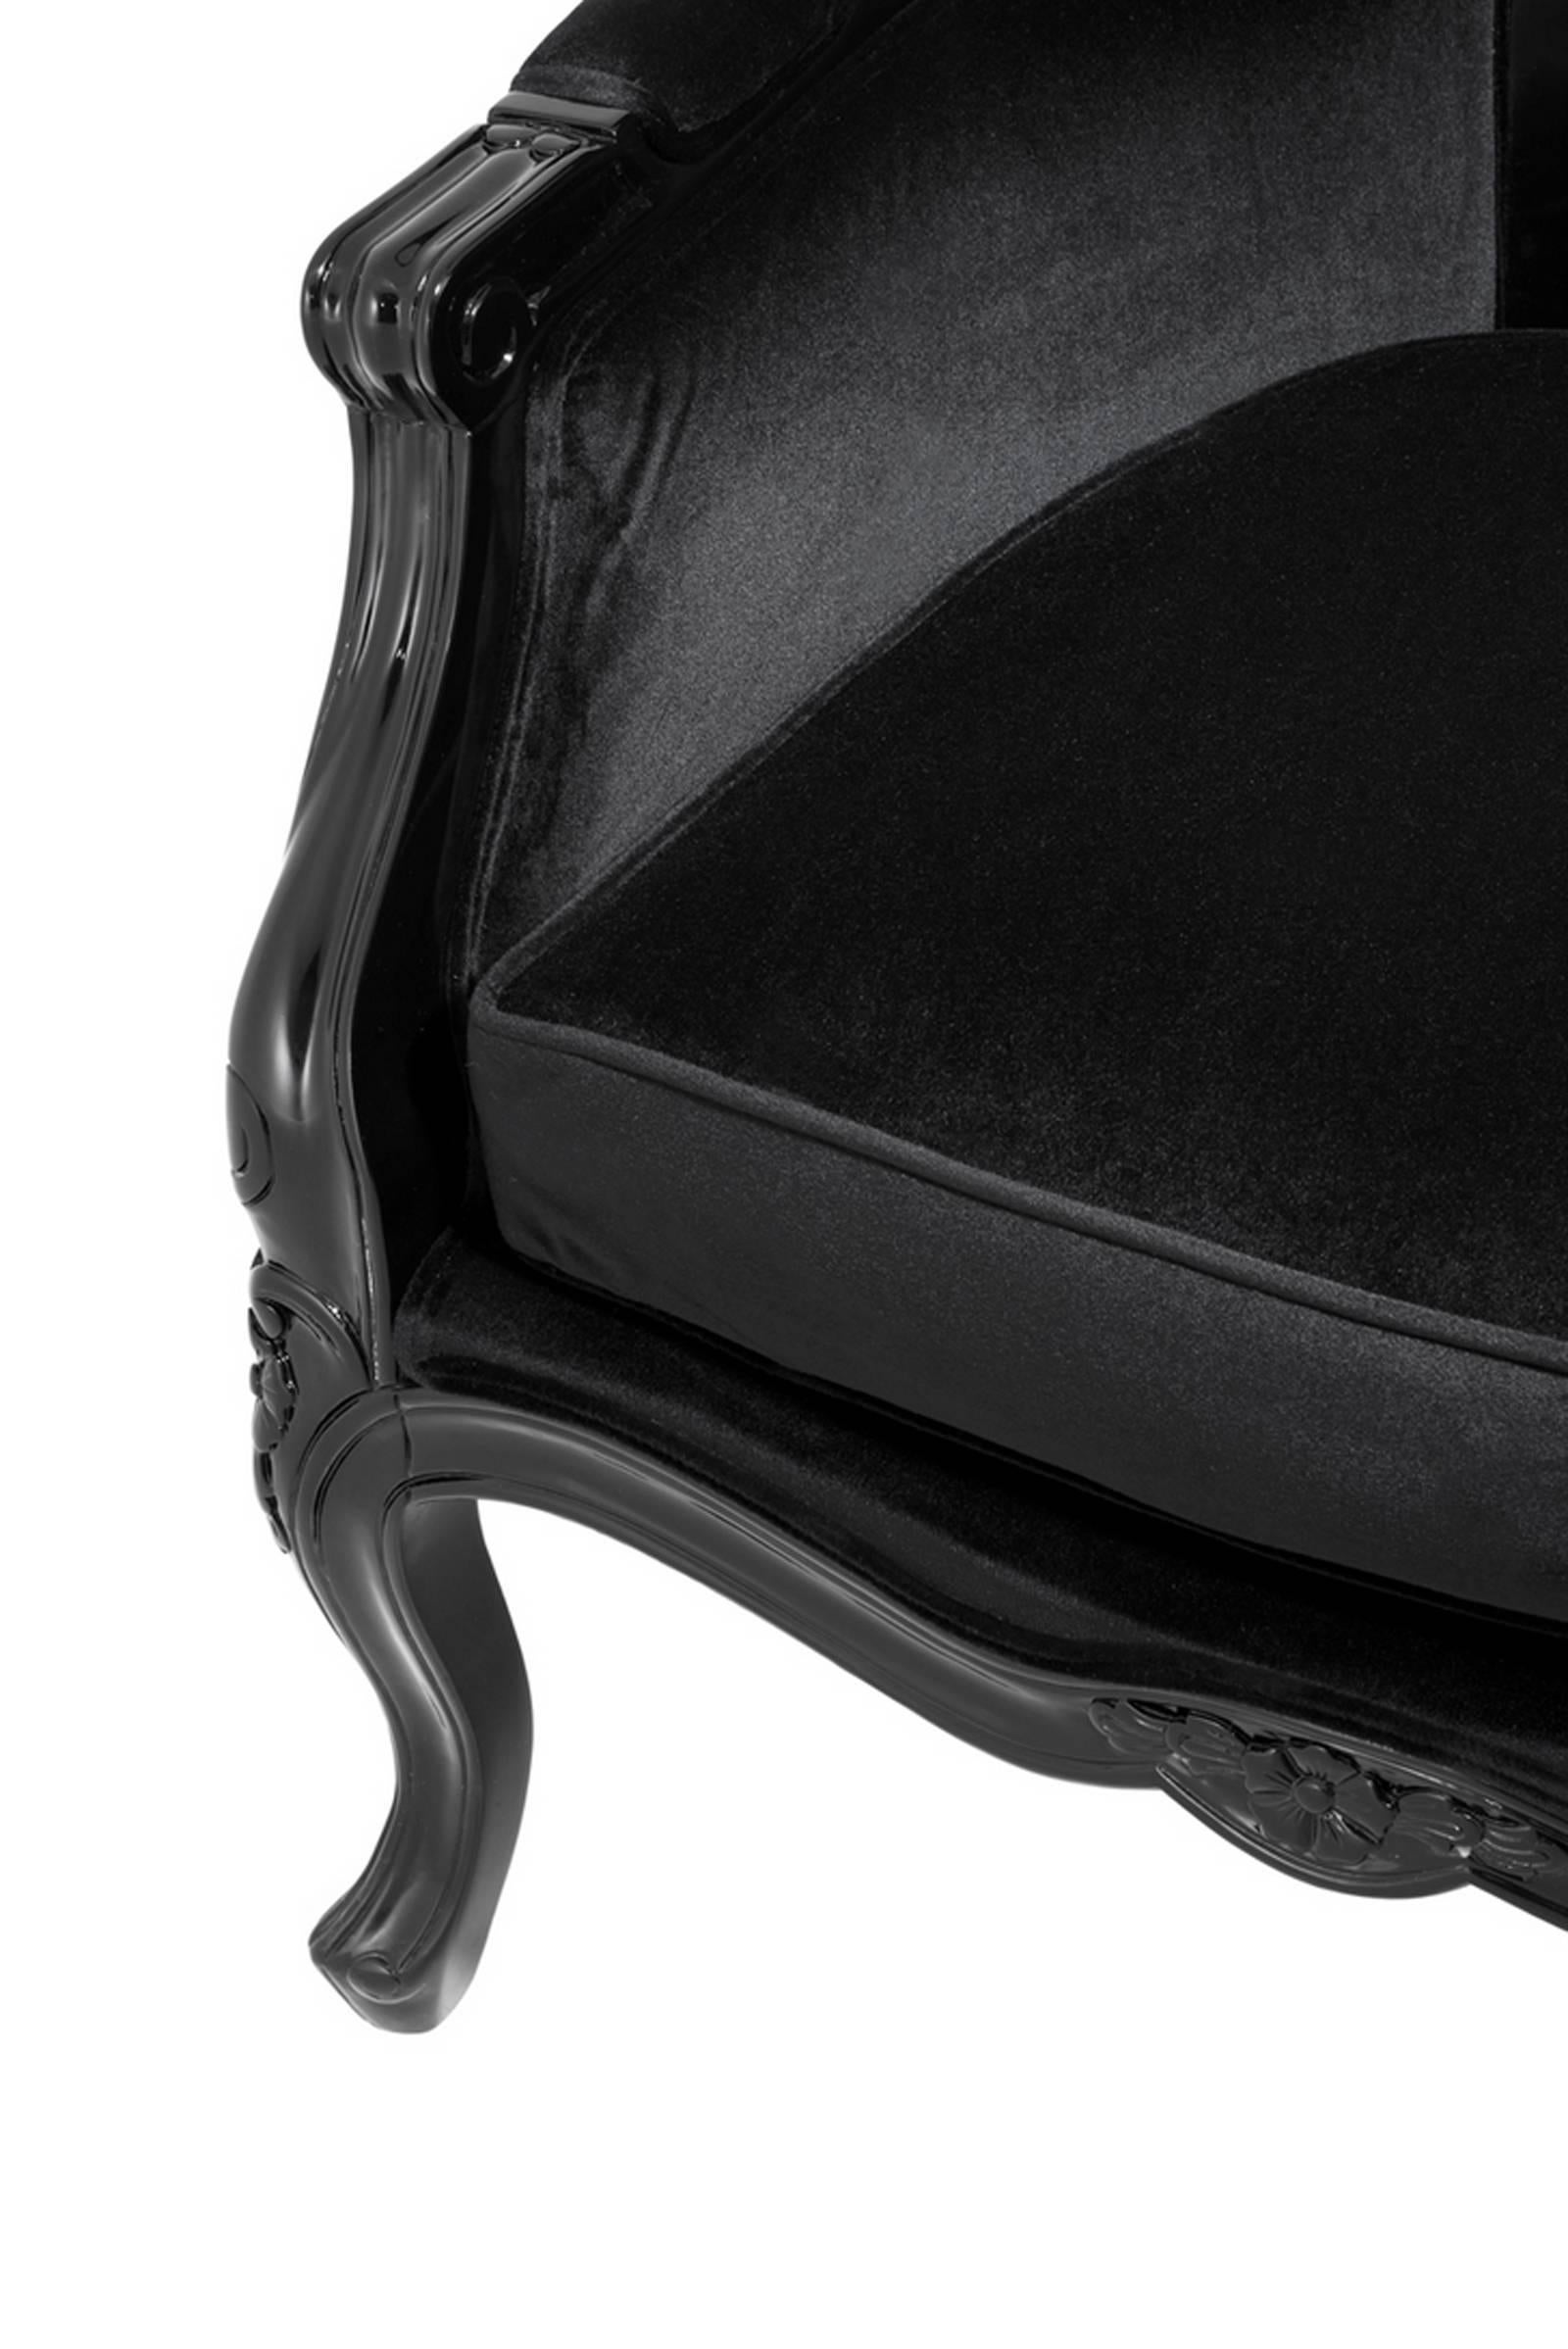 Buckingham Armchair in Black Velvet In Excellent Condition For Sale In Paris, FR